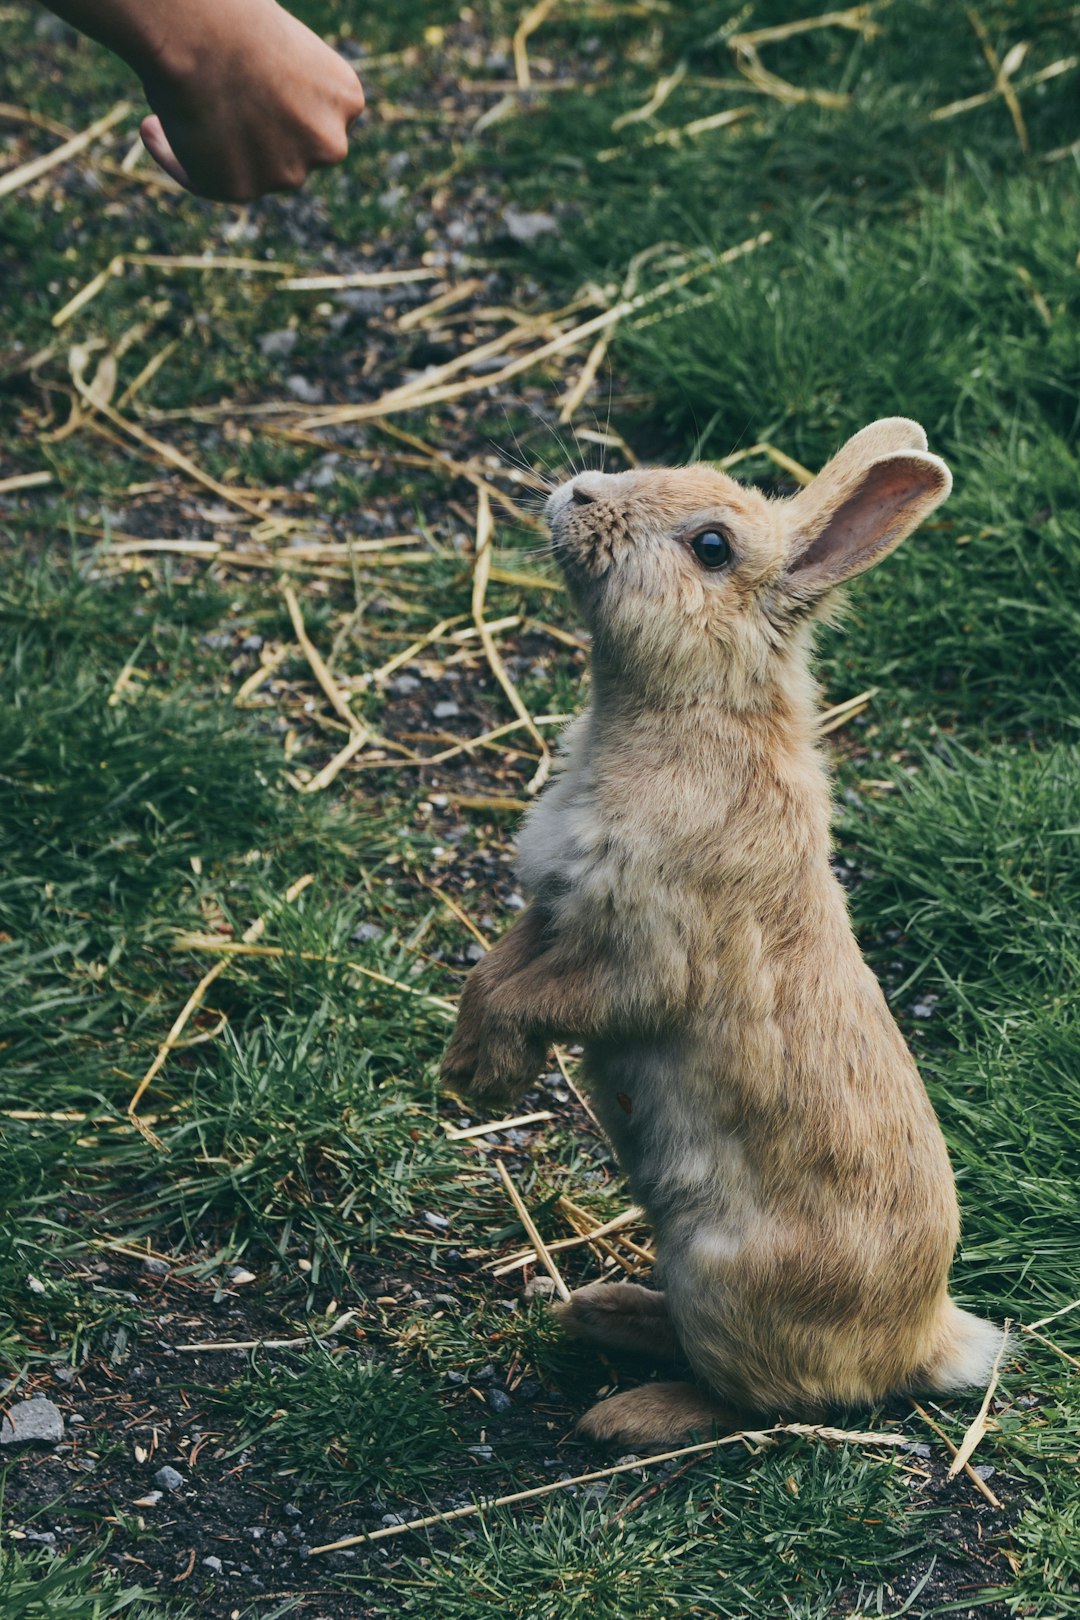  brown rabbit on green grass during daytime rabbit